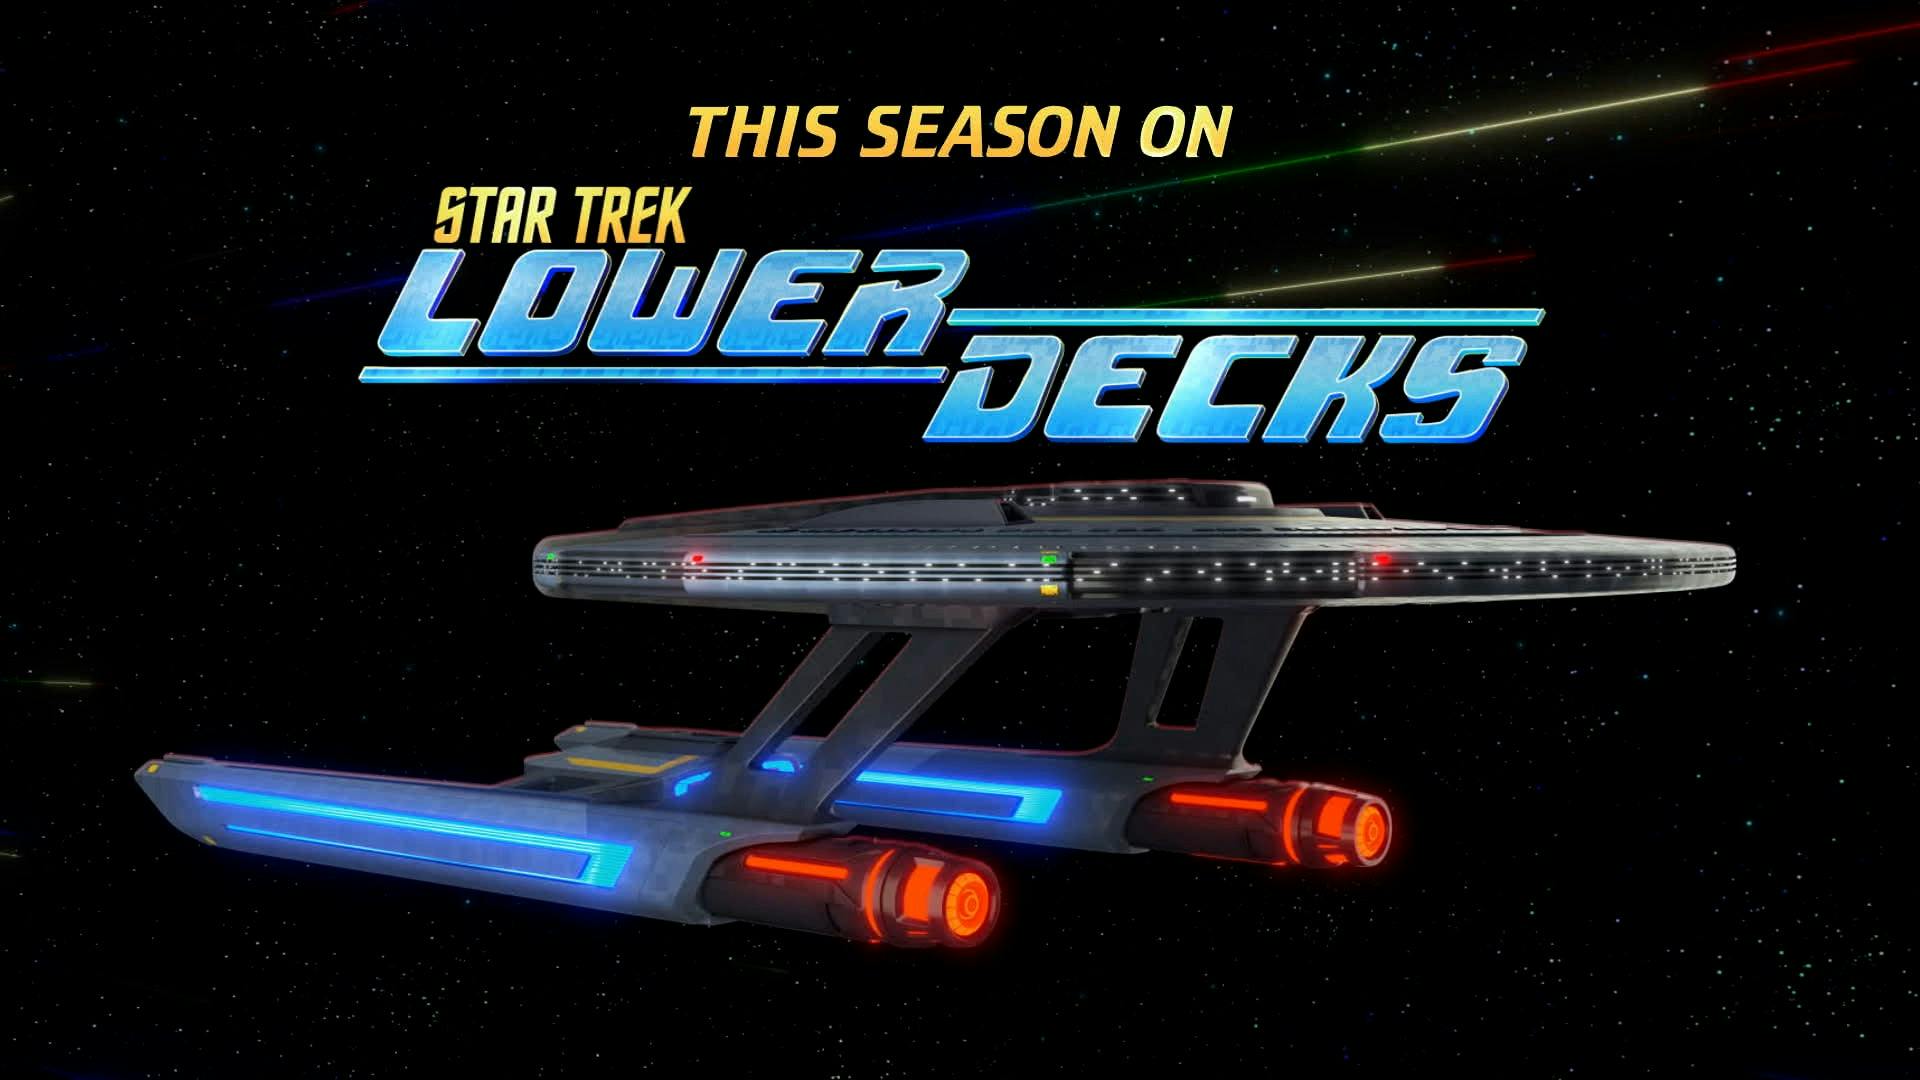 WATCH: This Season on Star Trek: Lower Decks